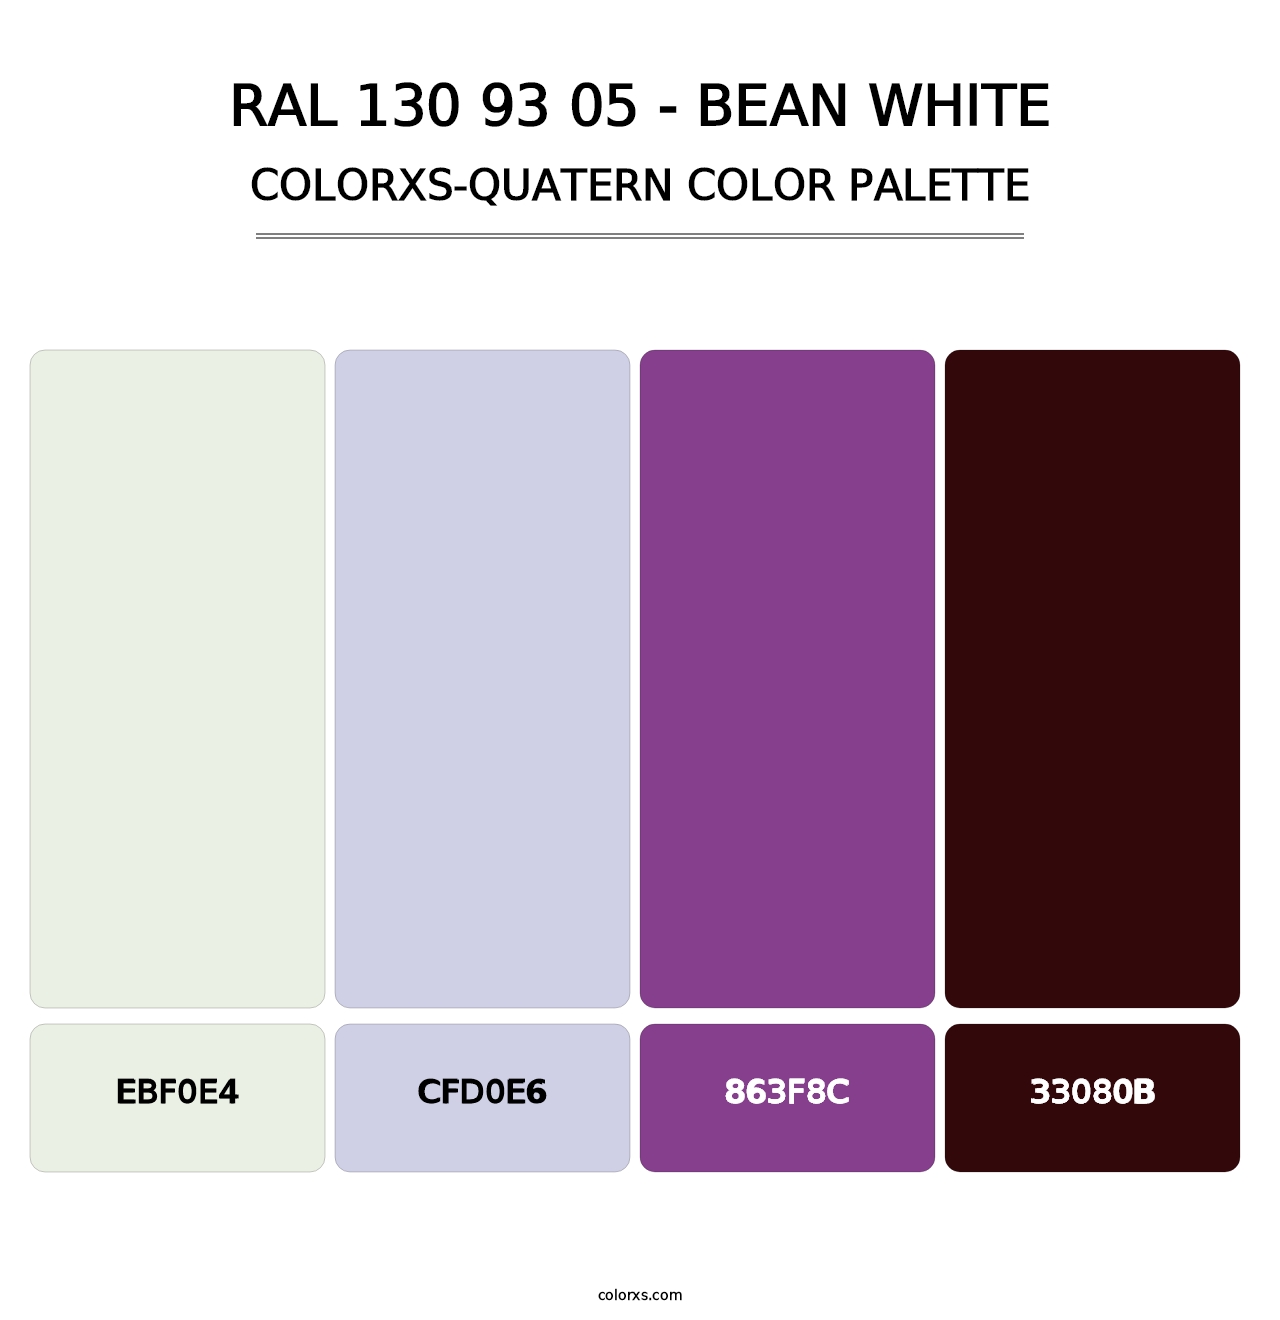 RAL 130 93 05 - Bean White - Colorxs Quatern Palette